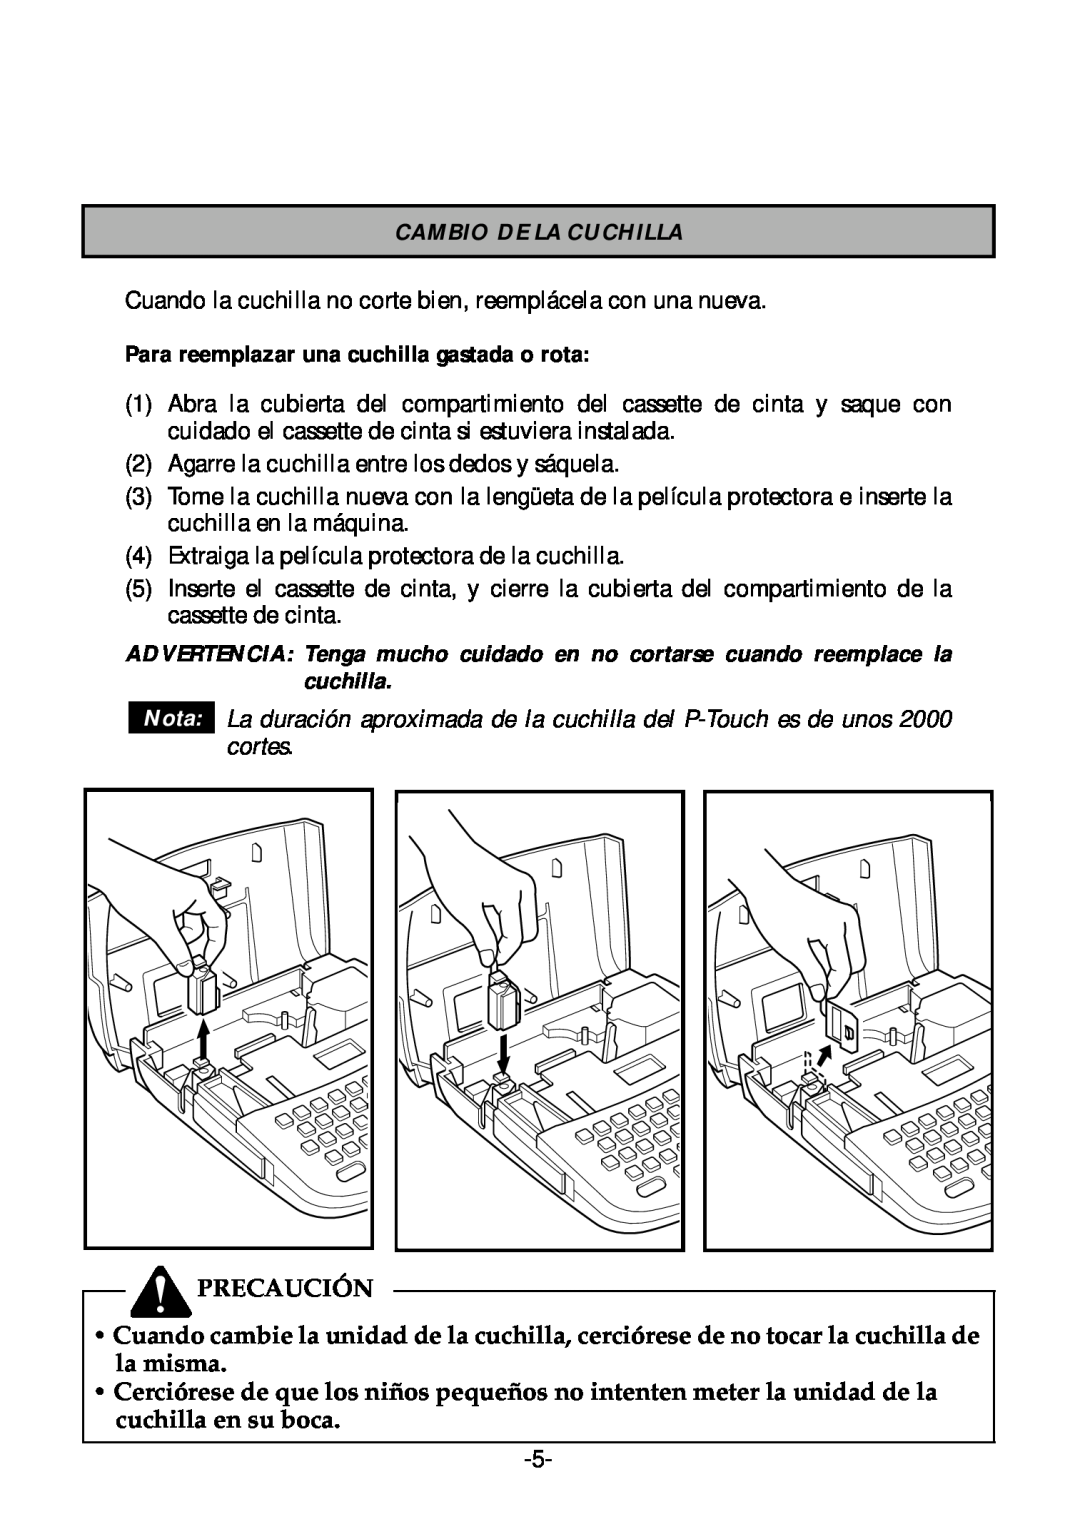 Brother PT-1700 manual Cambio De La Cuchilla, Para reemplazar una cuchilla gastada o rota, Nota 